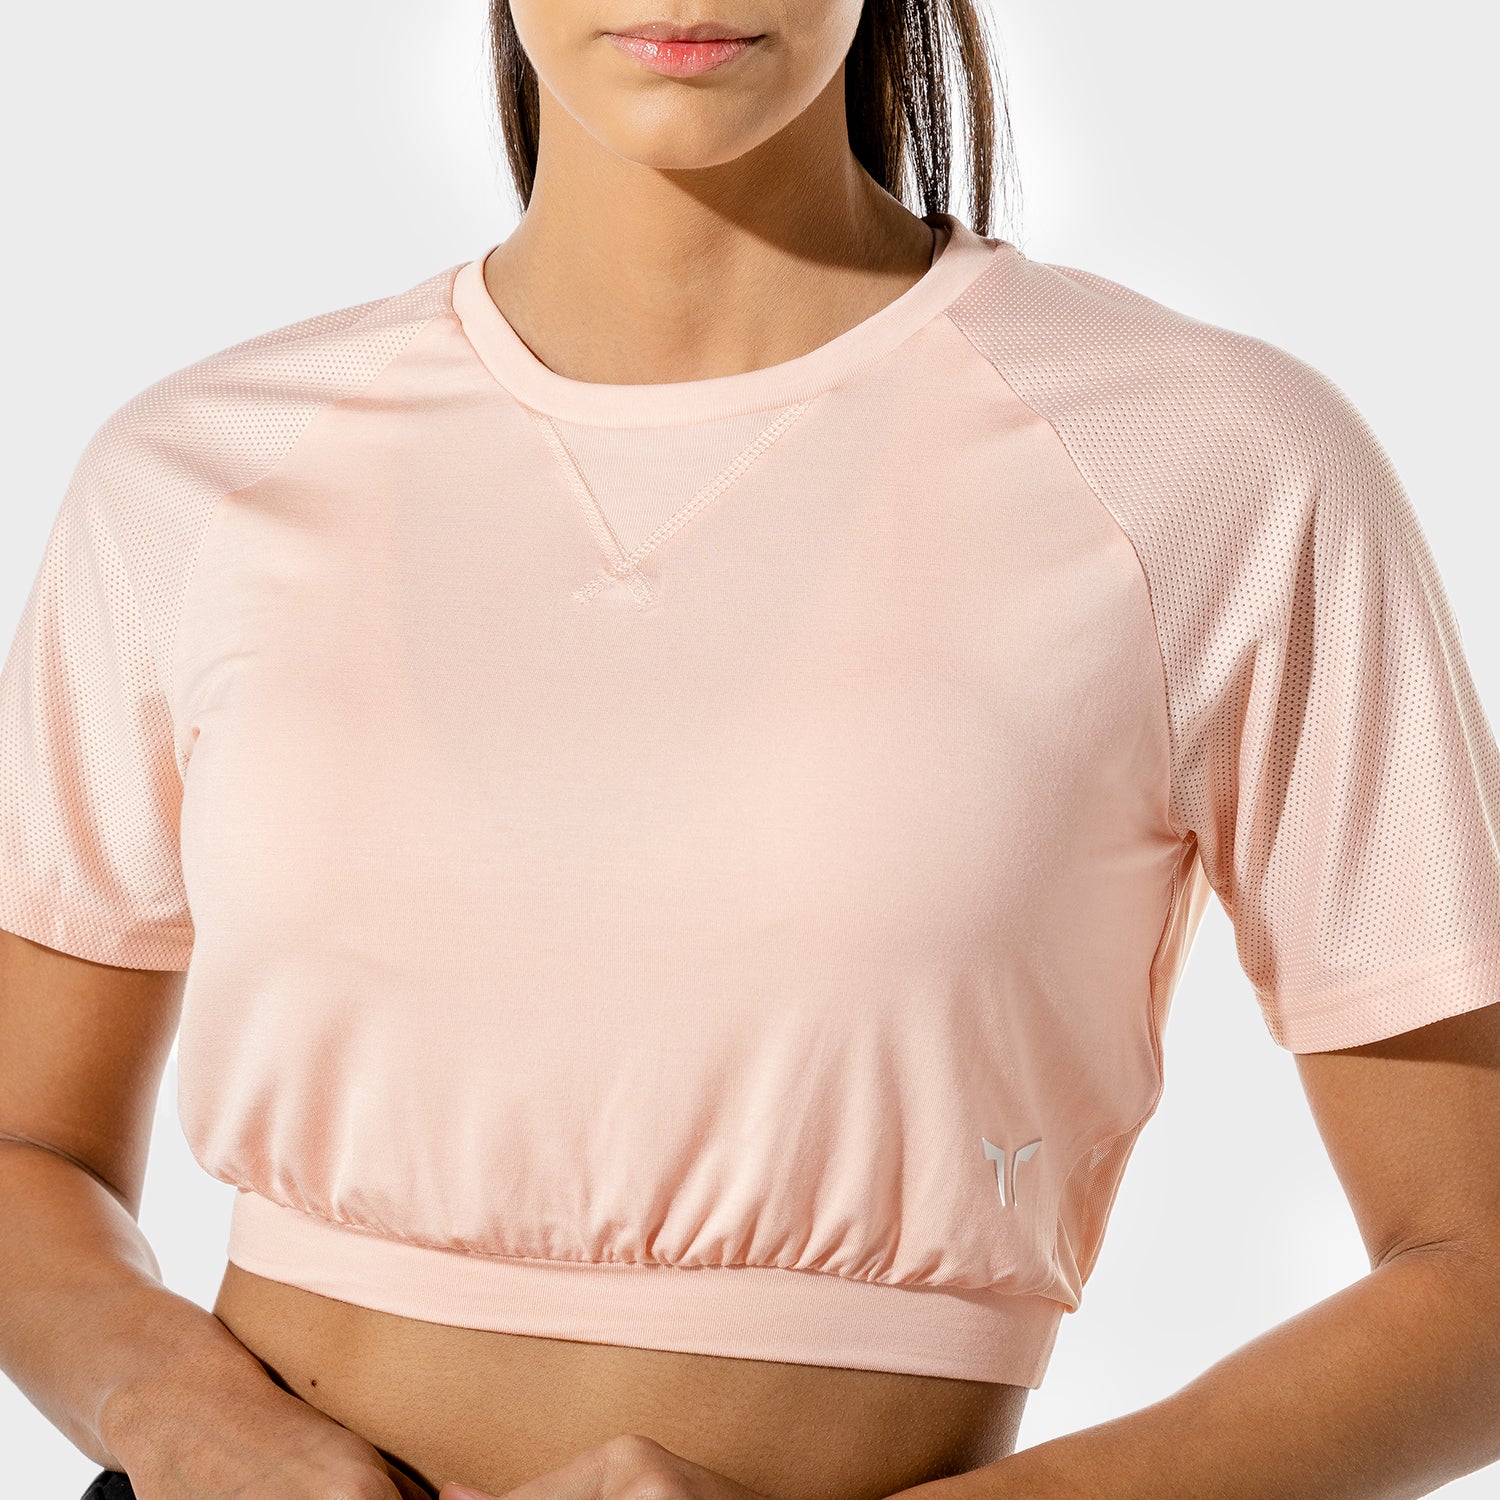 squatwolf-gym-wear-womens-fitness-crop-top-pink-workout-shirts